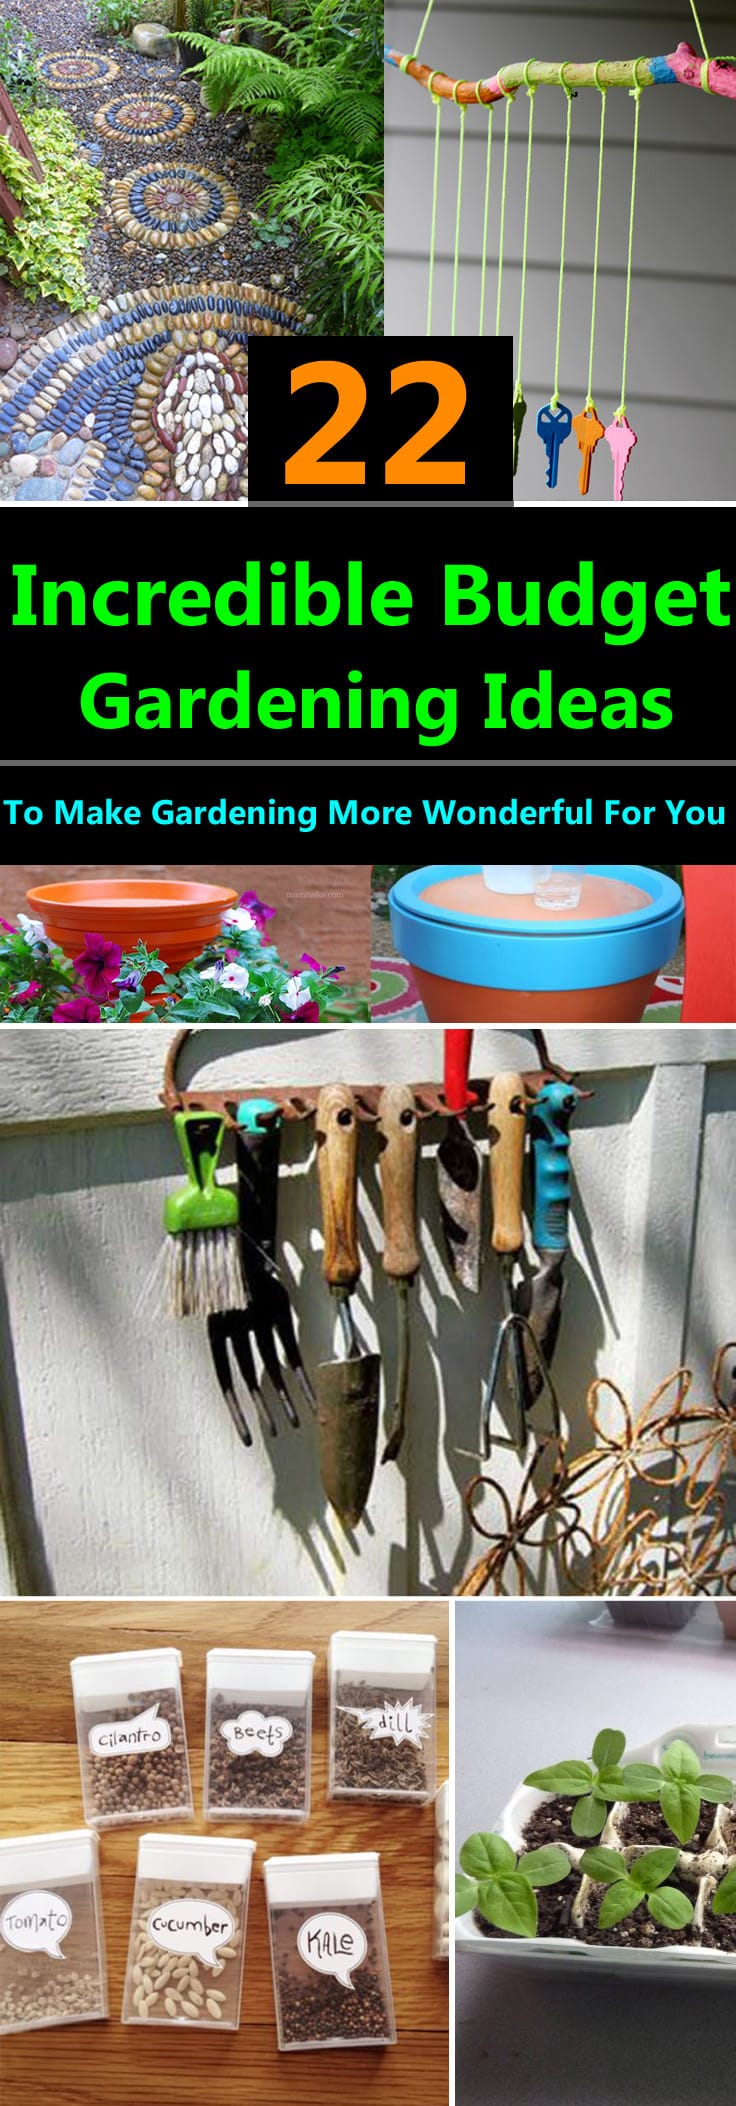 Incredible Budget Gardening Ideas copy